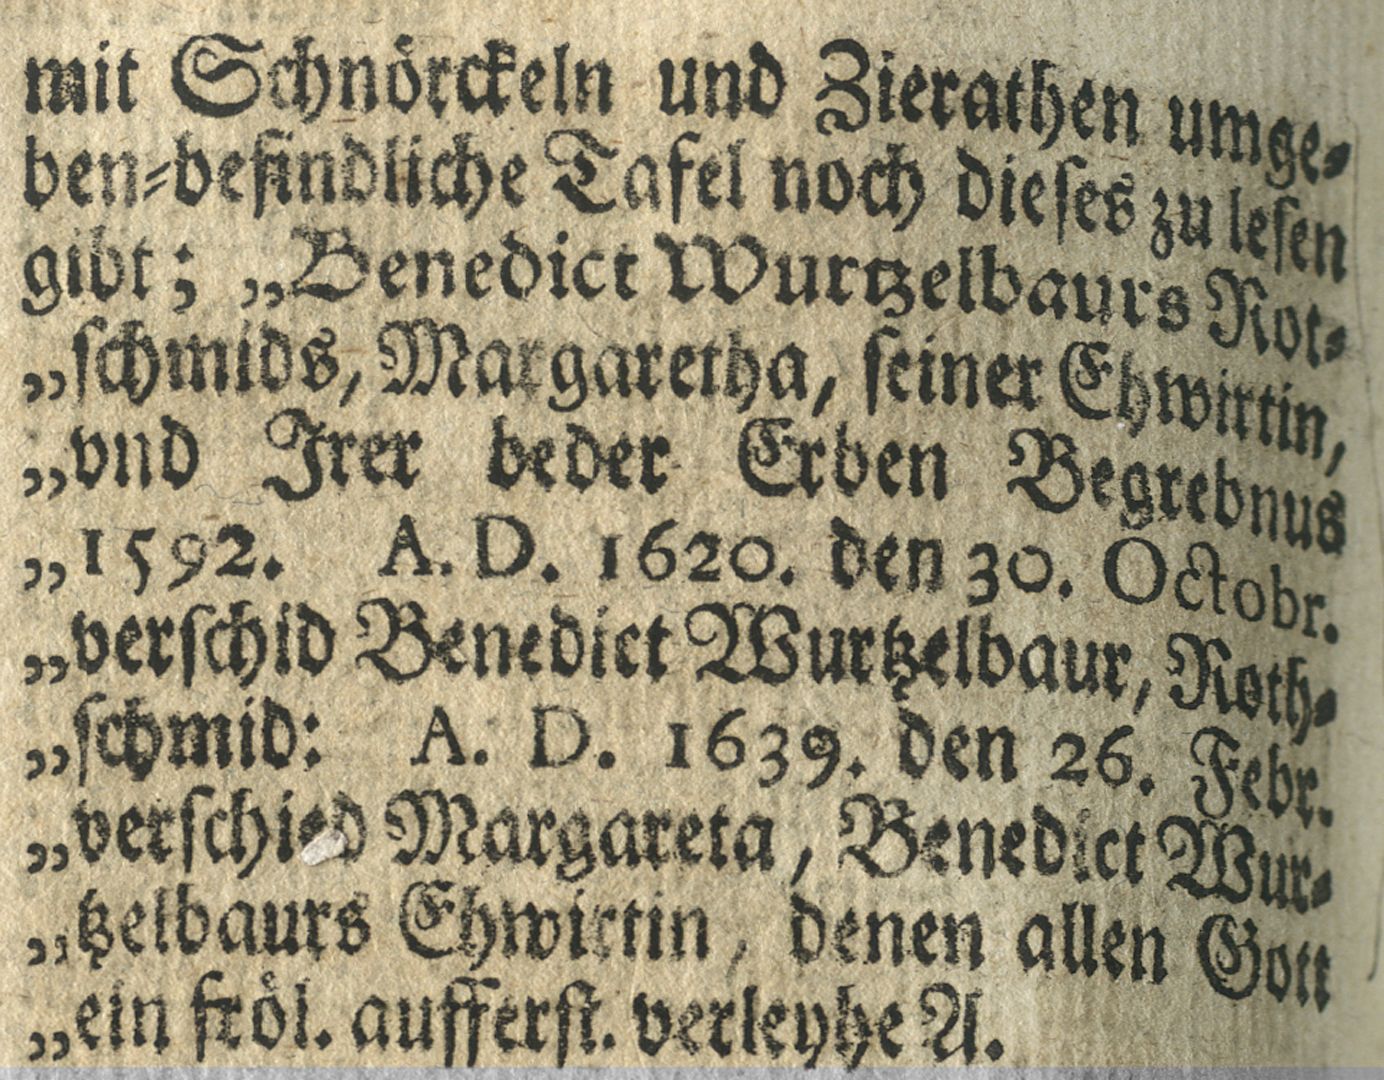 Epitaph Wurzelbauer "Benedict Wurzelbauers Rotschmids, Magaretha, seiner Ehwirtin....."